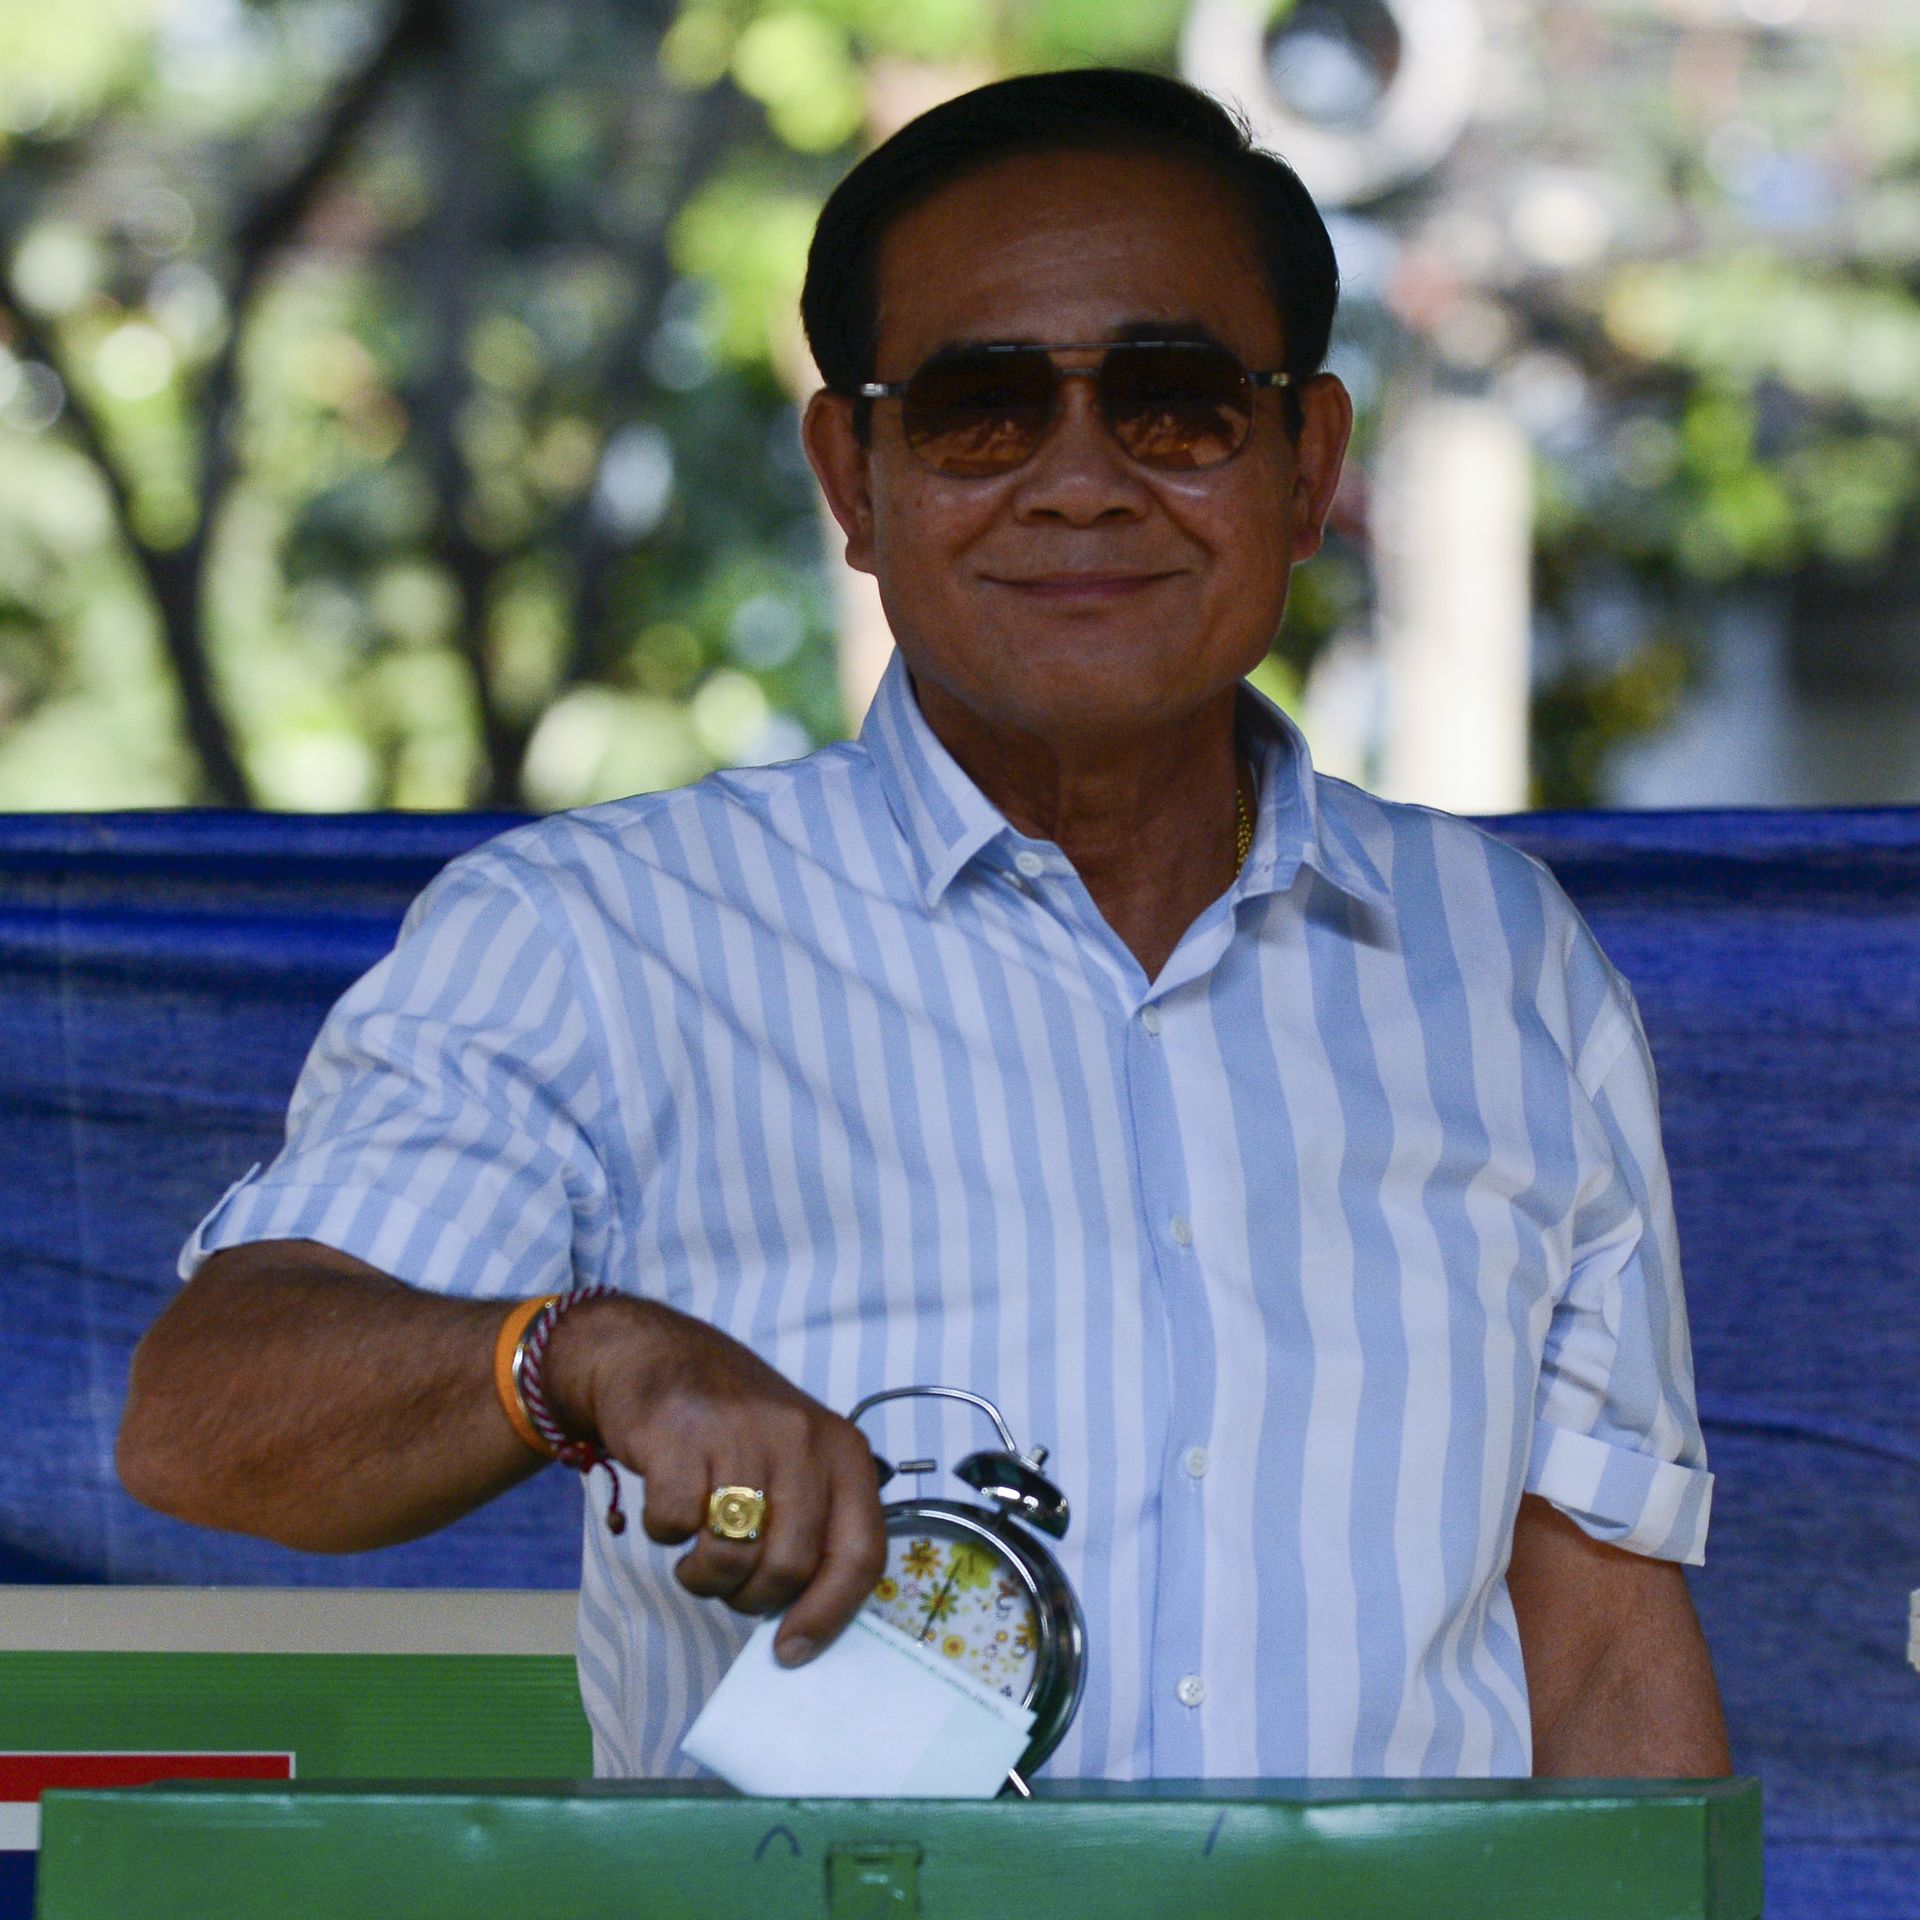 Thailand's Prime Minister Prayuth Chan-Ocha casting his vote.